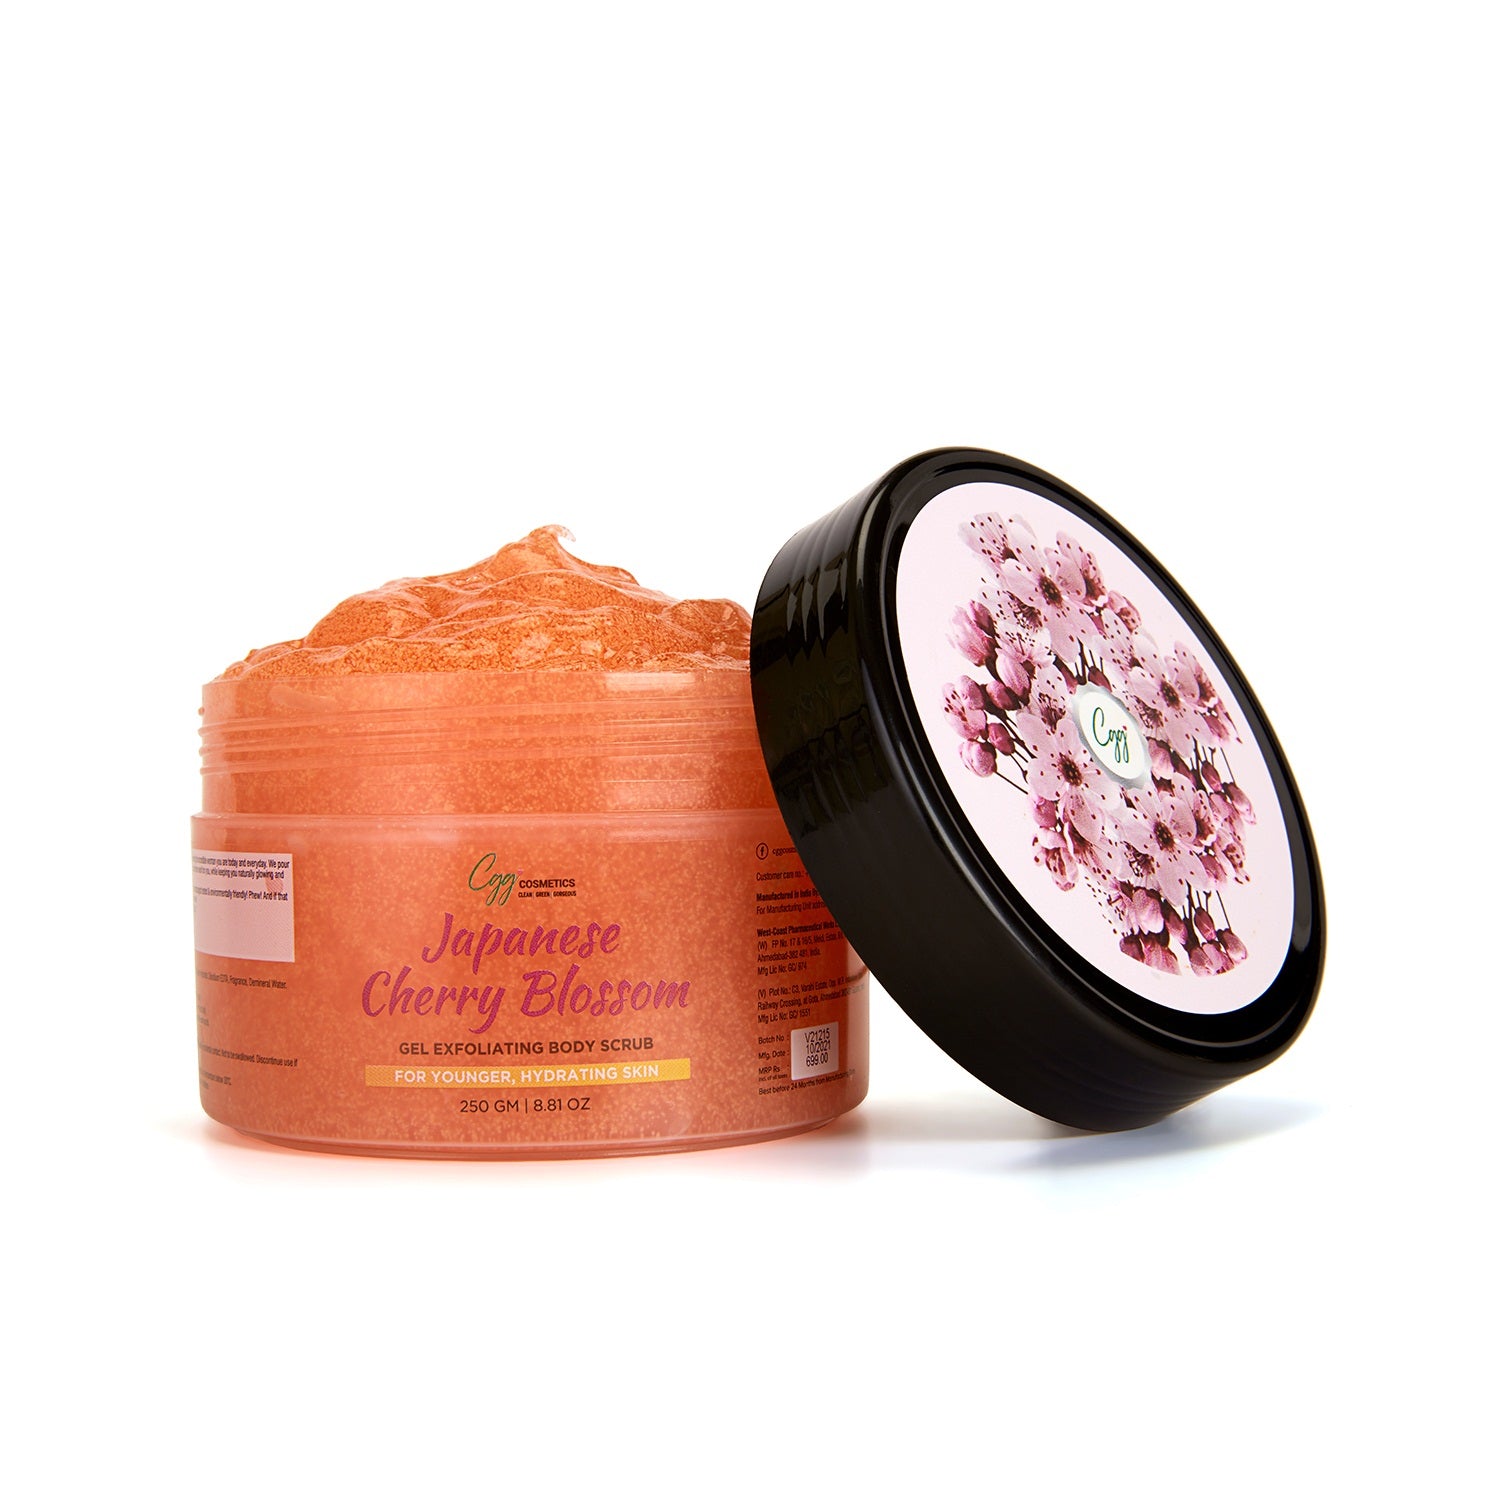 CGG Cosmetics Japanese Cherry Blossom Gel Exfoliating Body Scrub - Young, Hydrating Skin & 100% Pure JCB Extract - 250gm